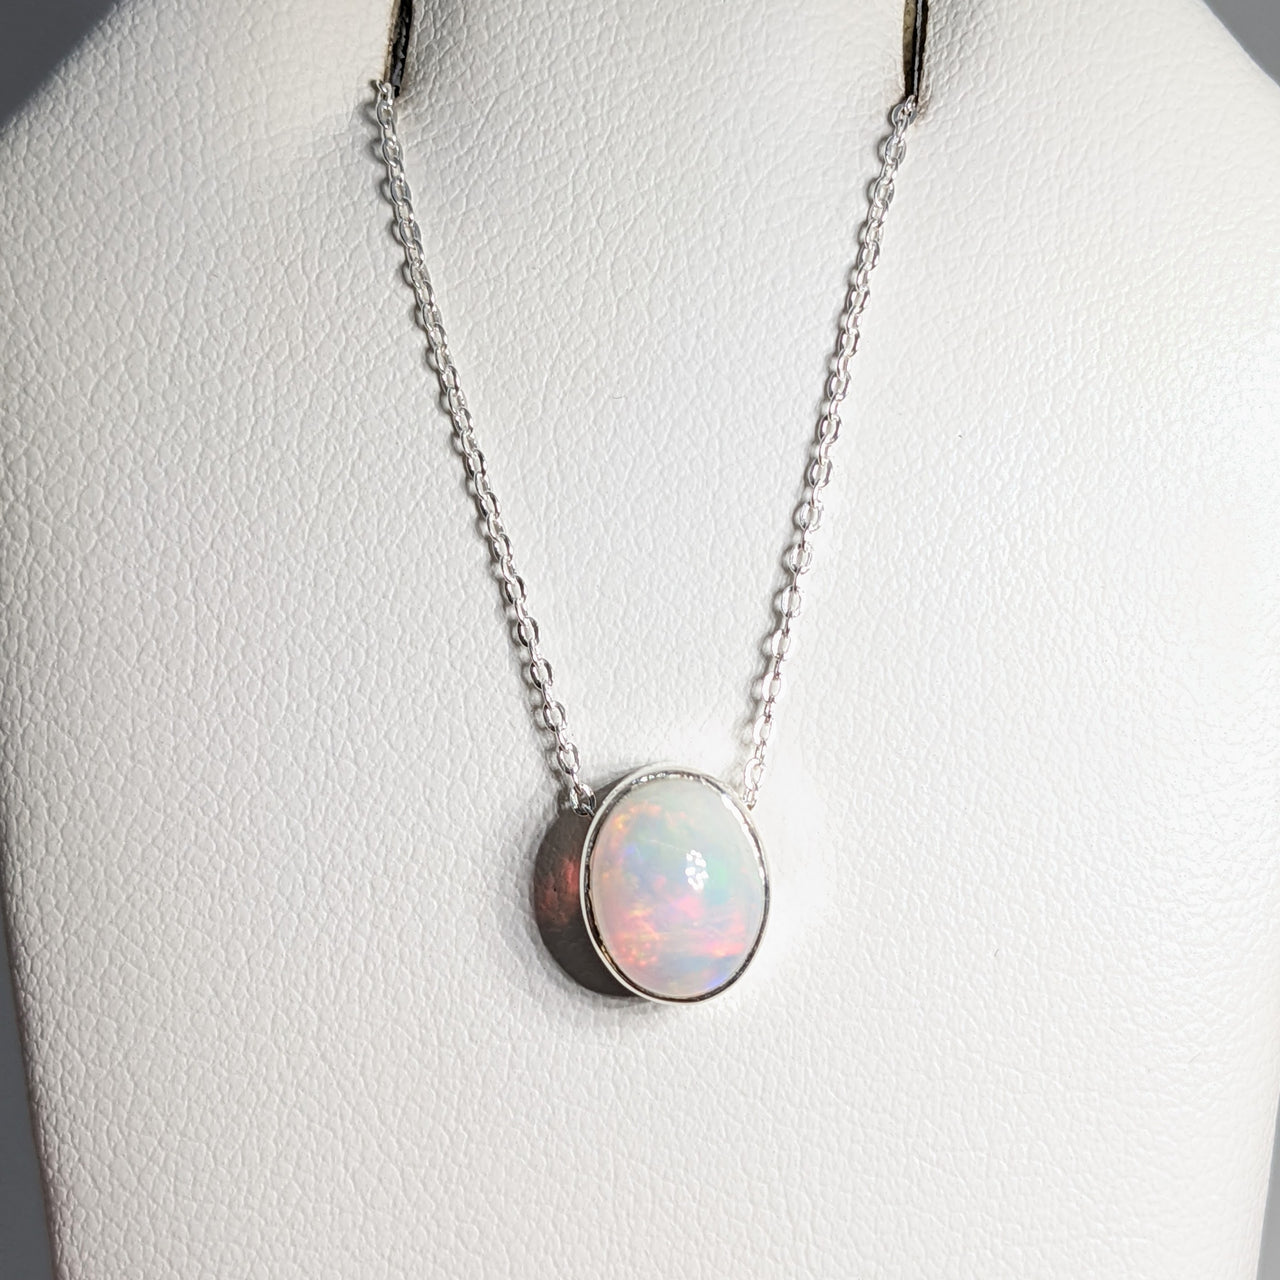 Ethiopian Opal Necklace, Sterling Silver Slider Pendant on 16"-18" Adjustable Chain 20% OFF SALE #SK7302